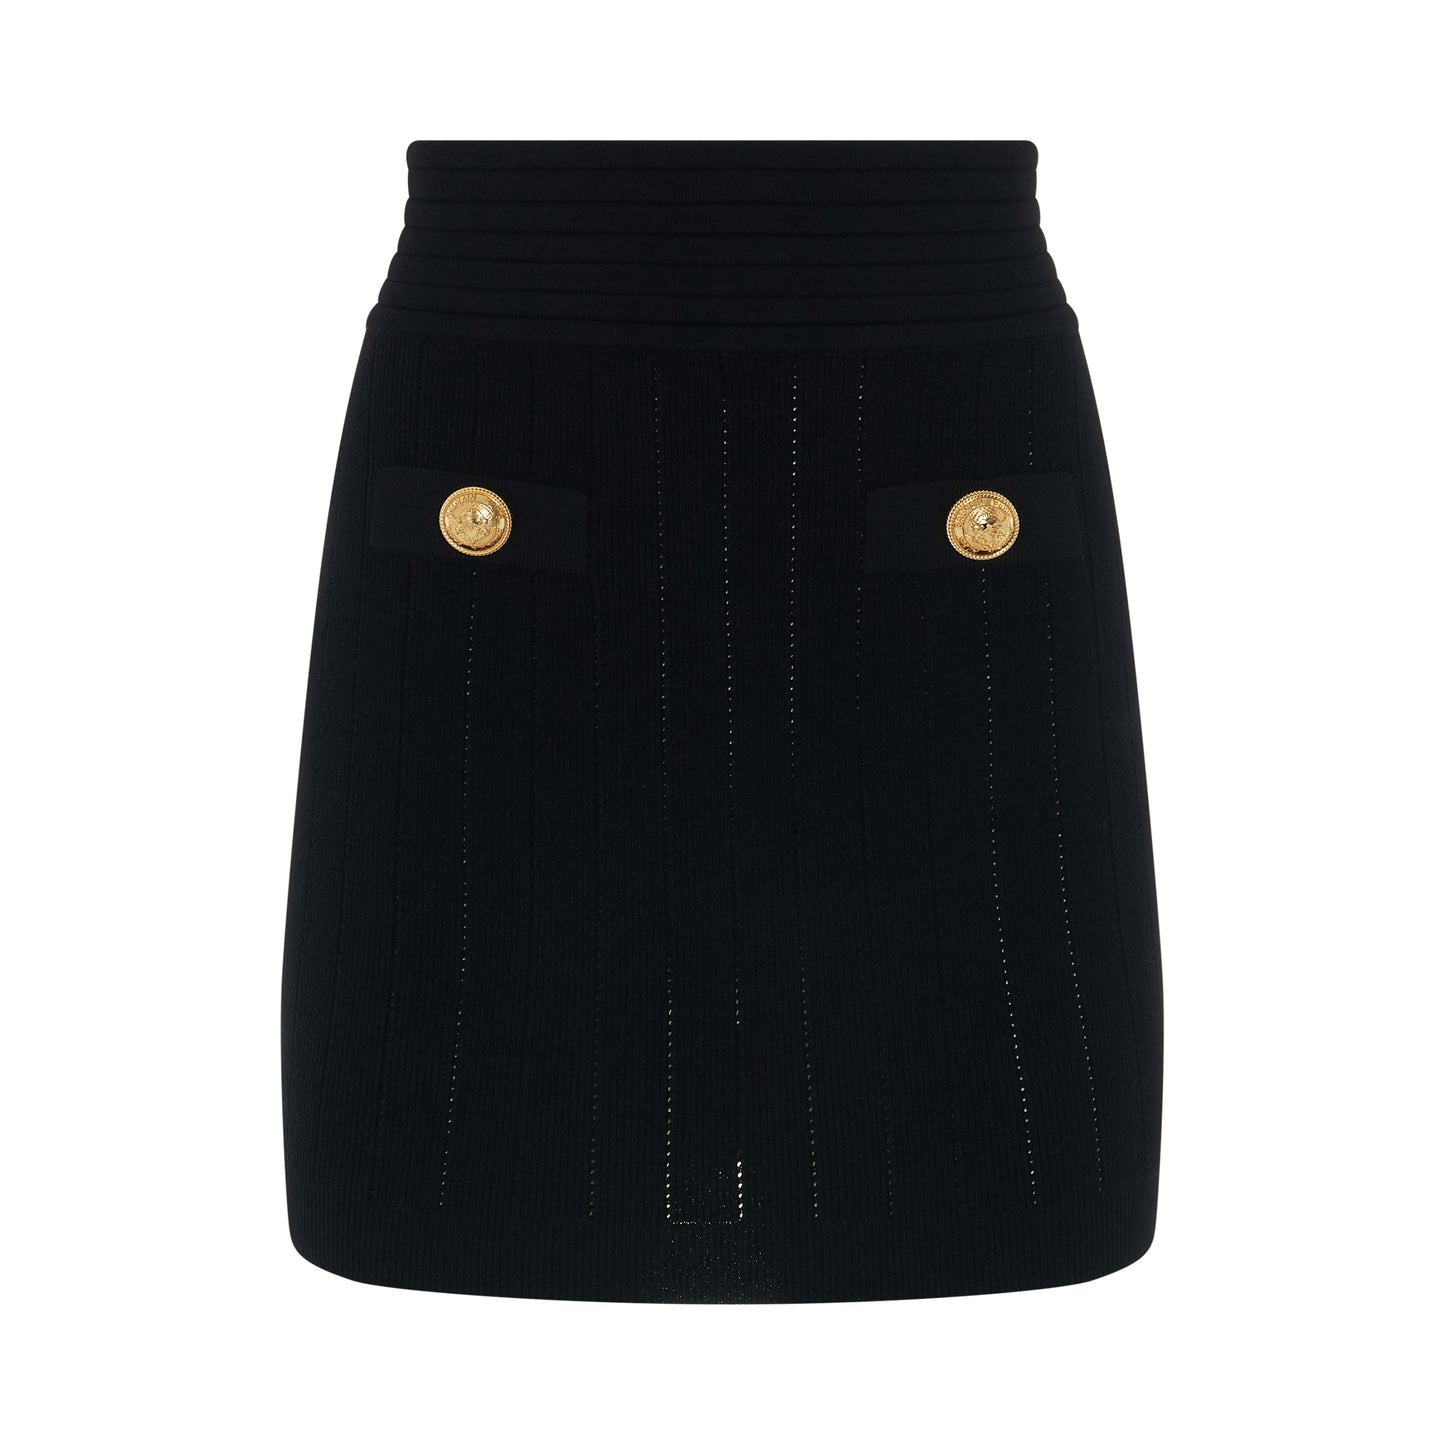 2 Button Short Knitted Skirt in Black